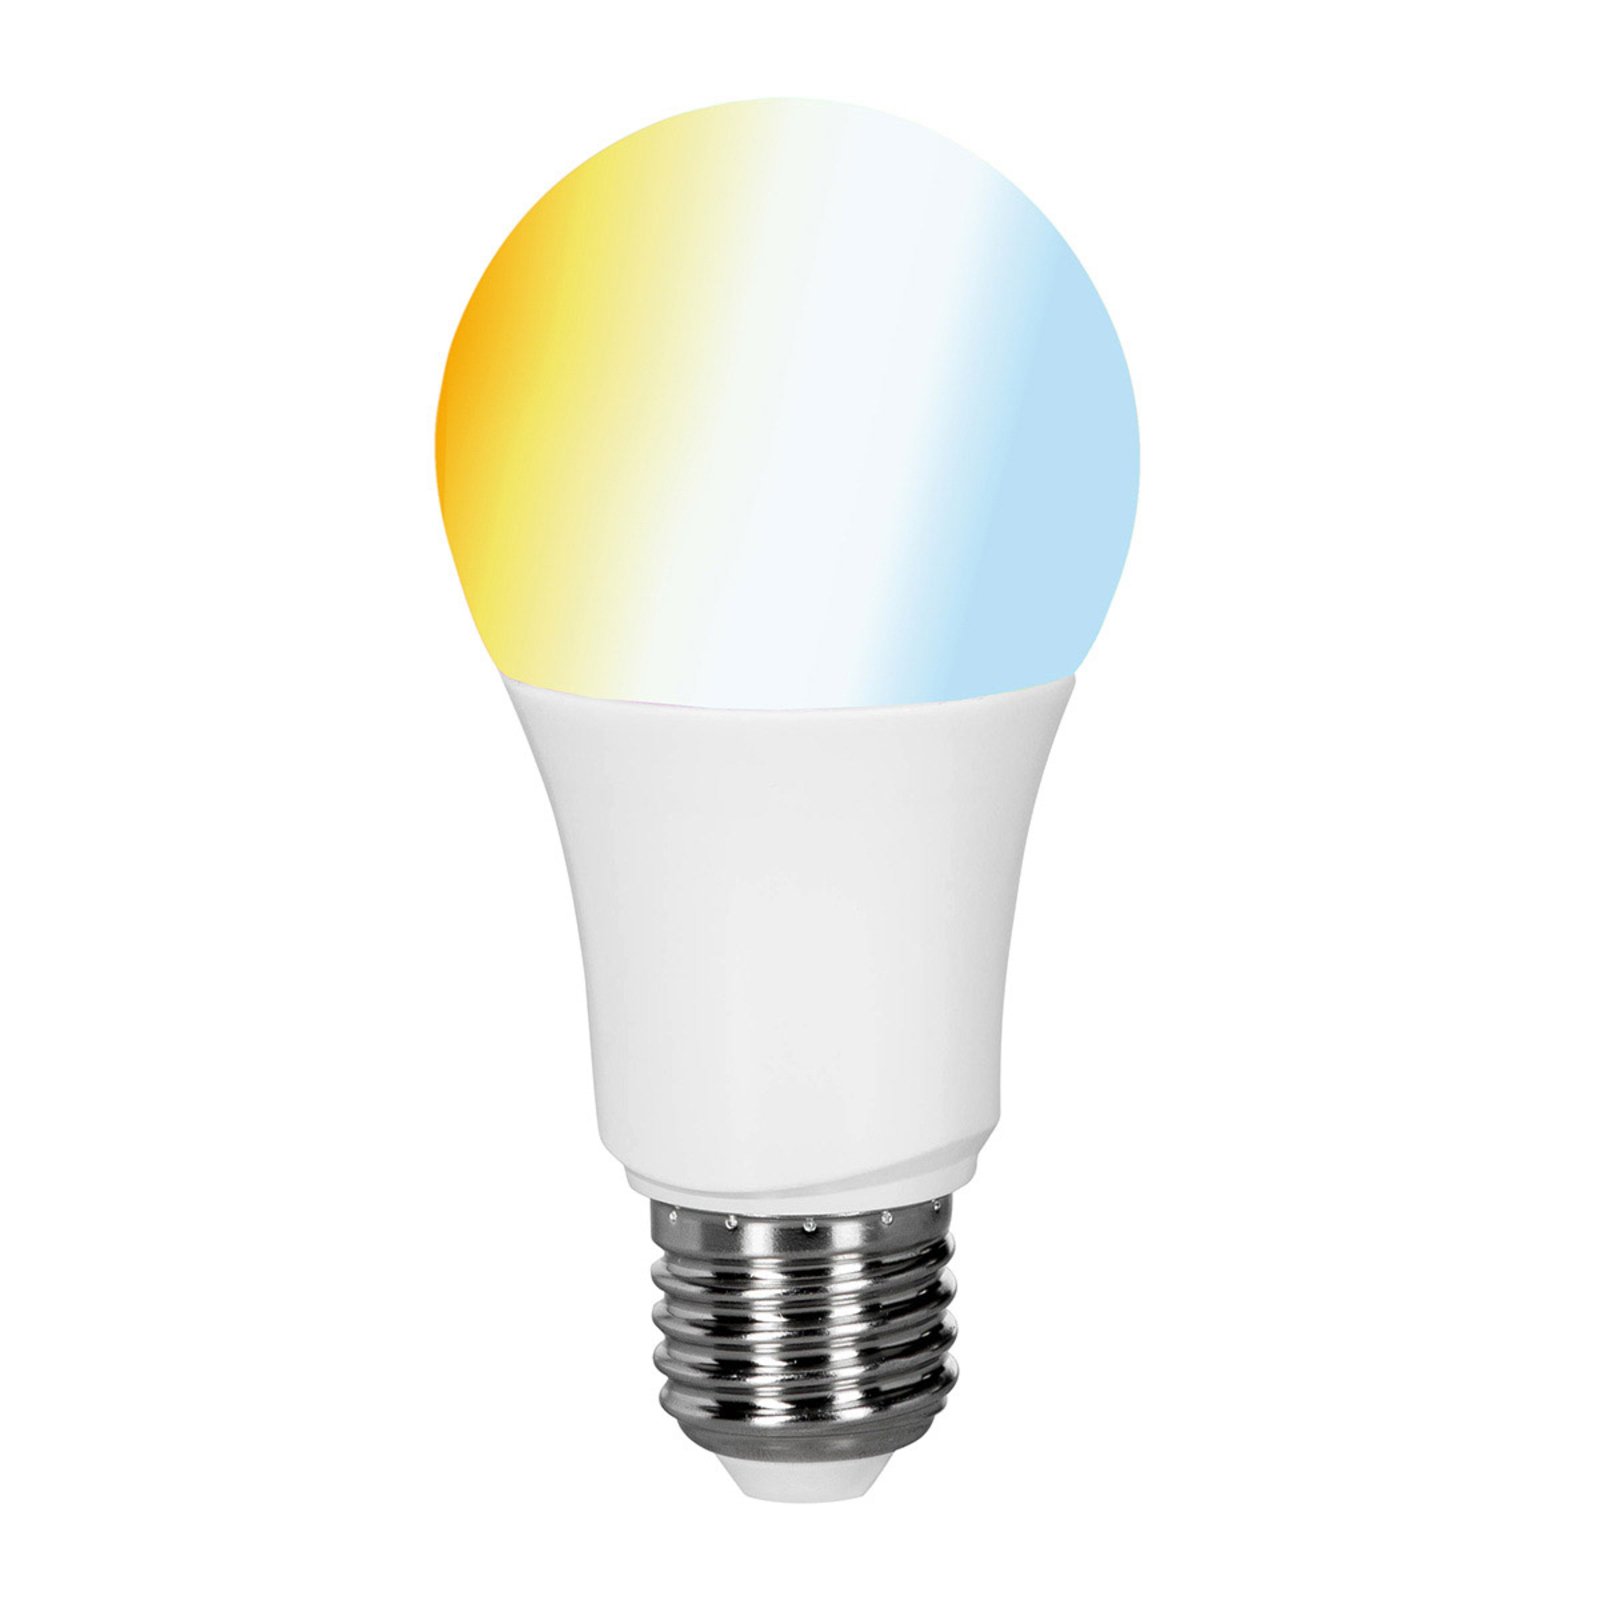 Müller Licht tint white lampadina LED E27 9W, CCT